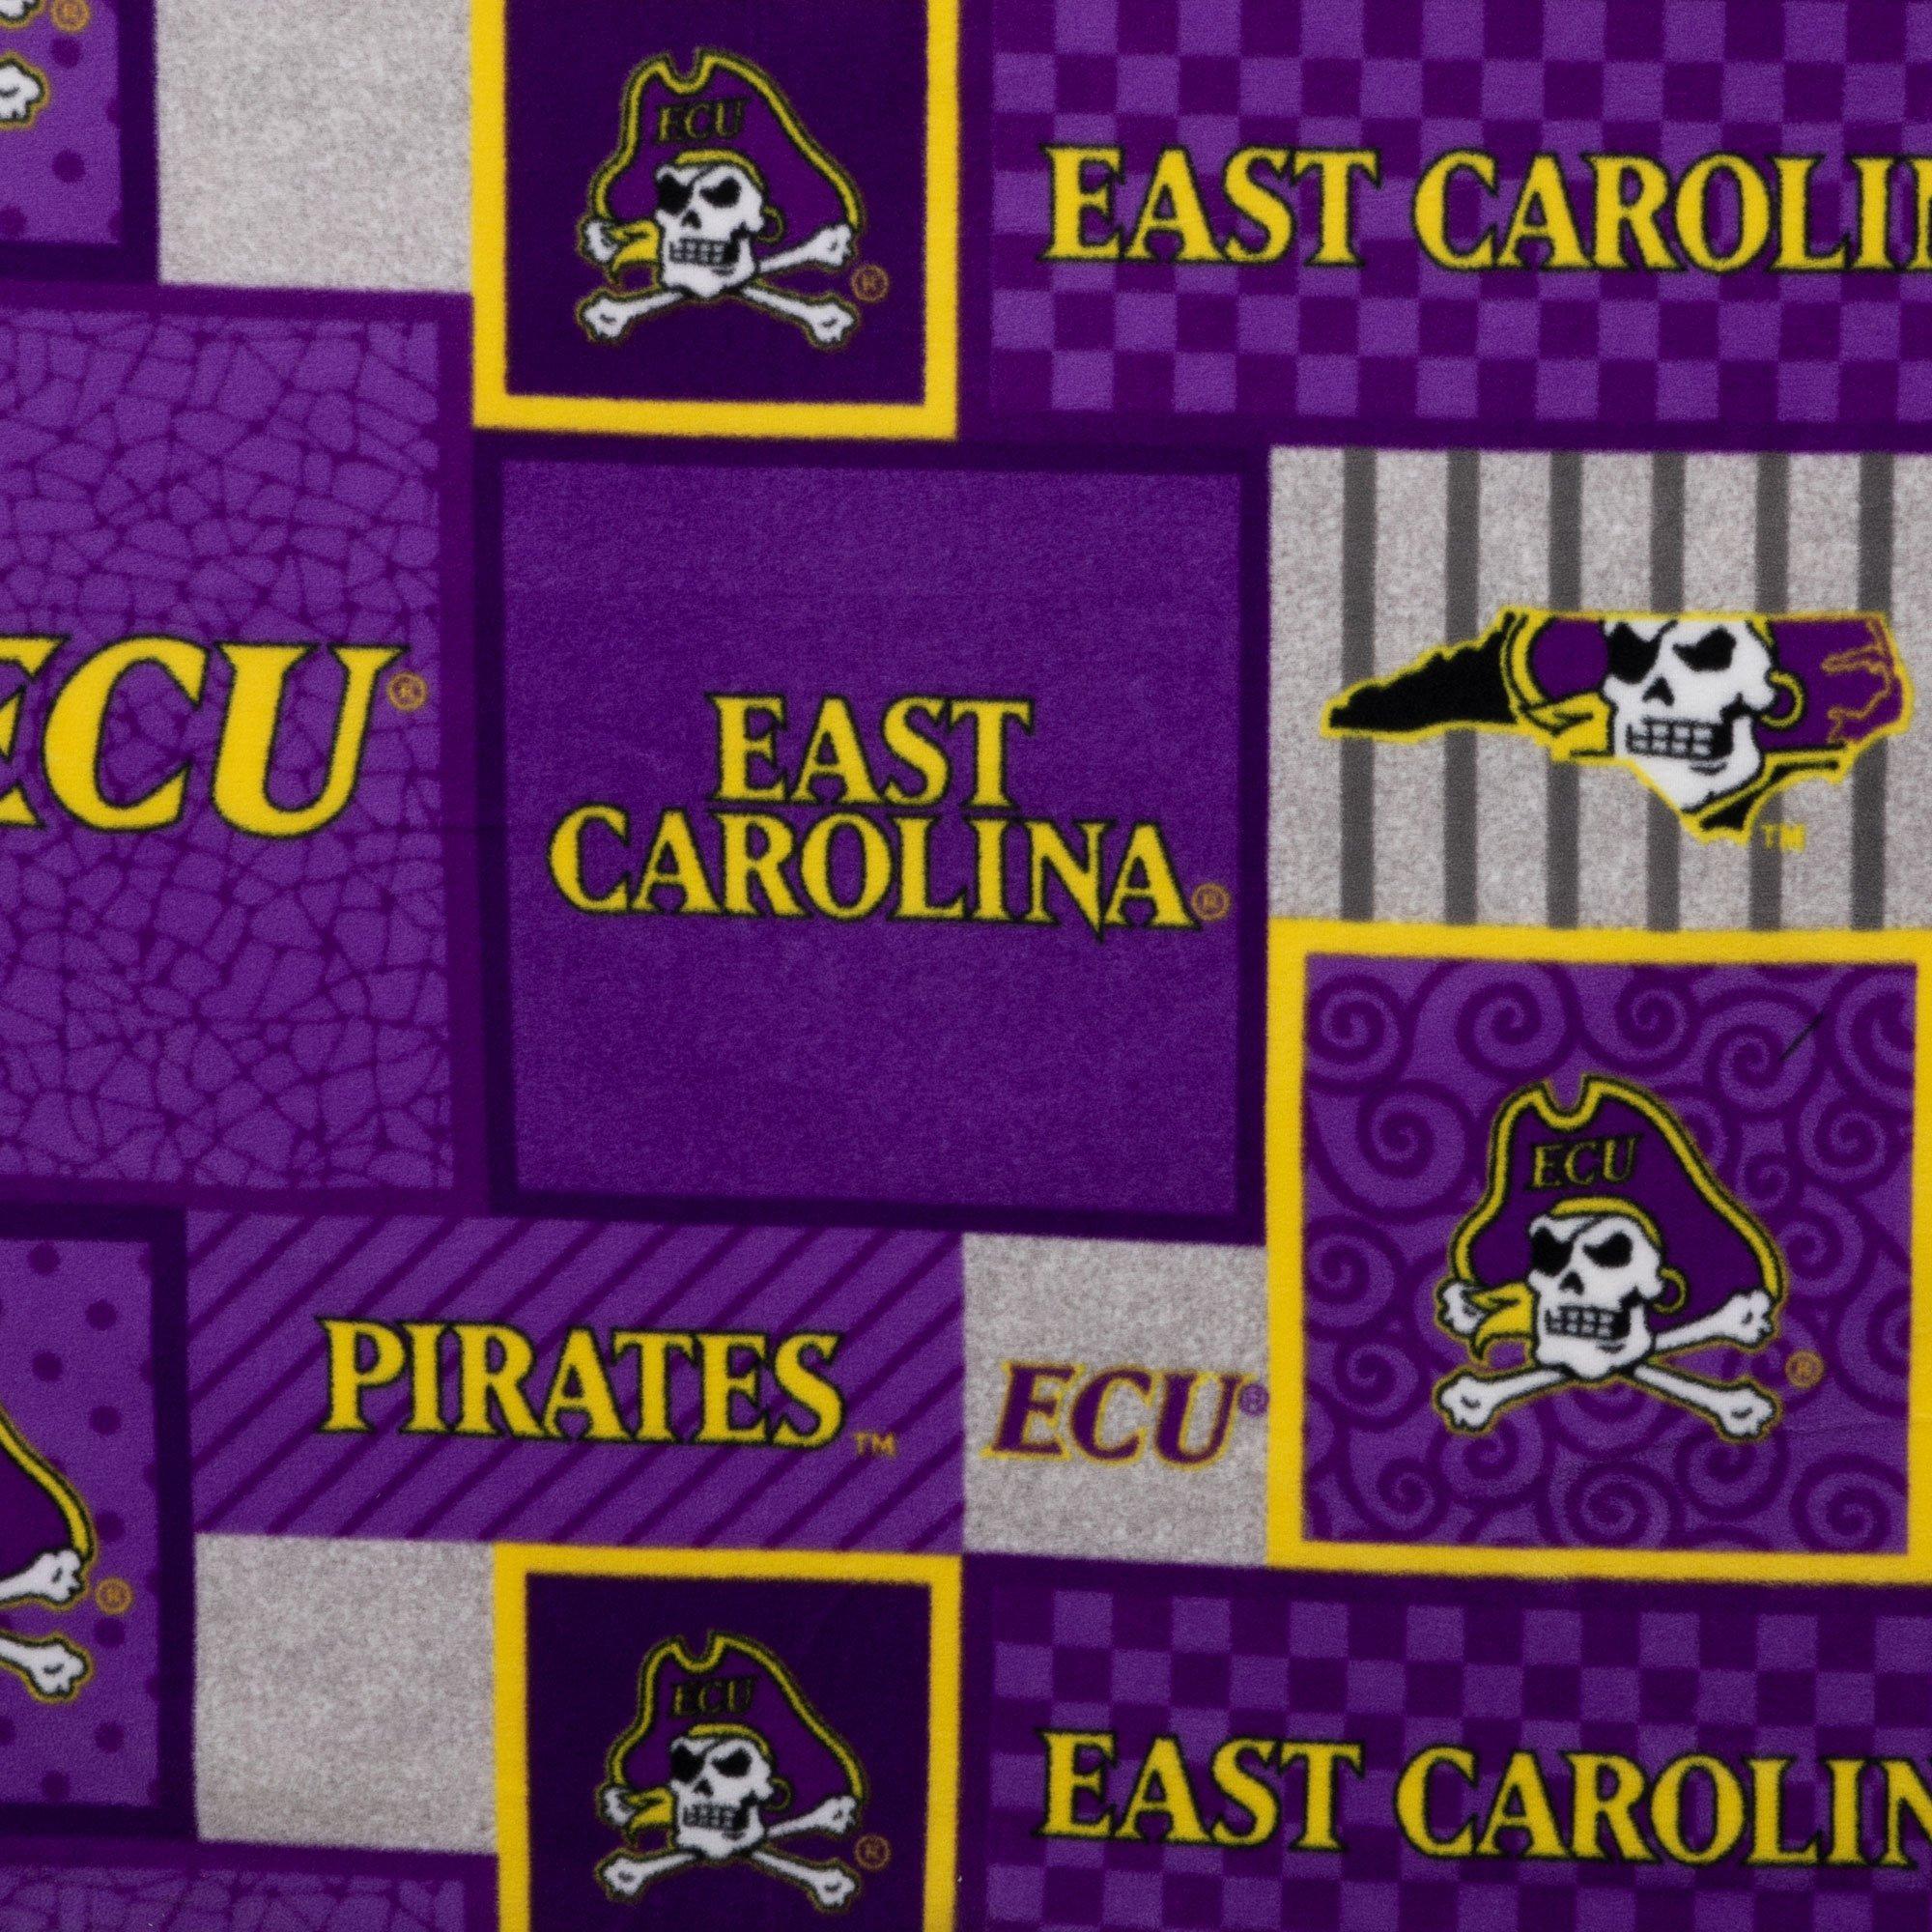 East Carolina Pirates Lawn Chairs - ECU Pirates Lawn Chairs - East